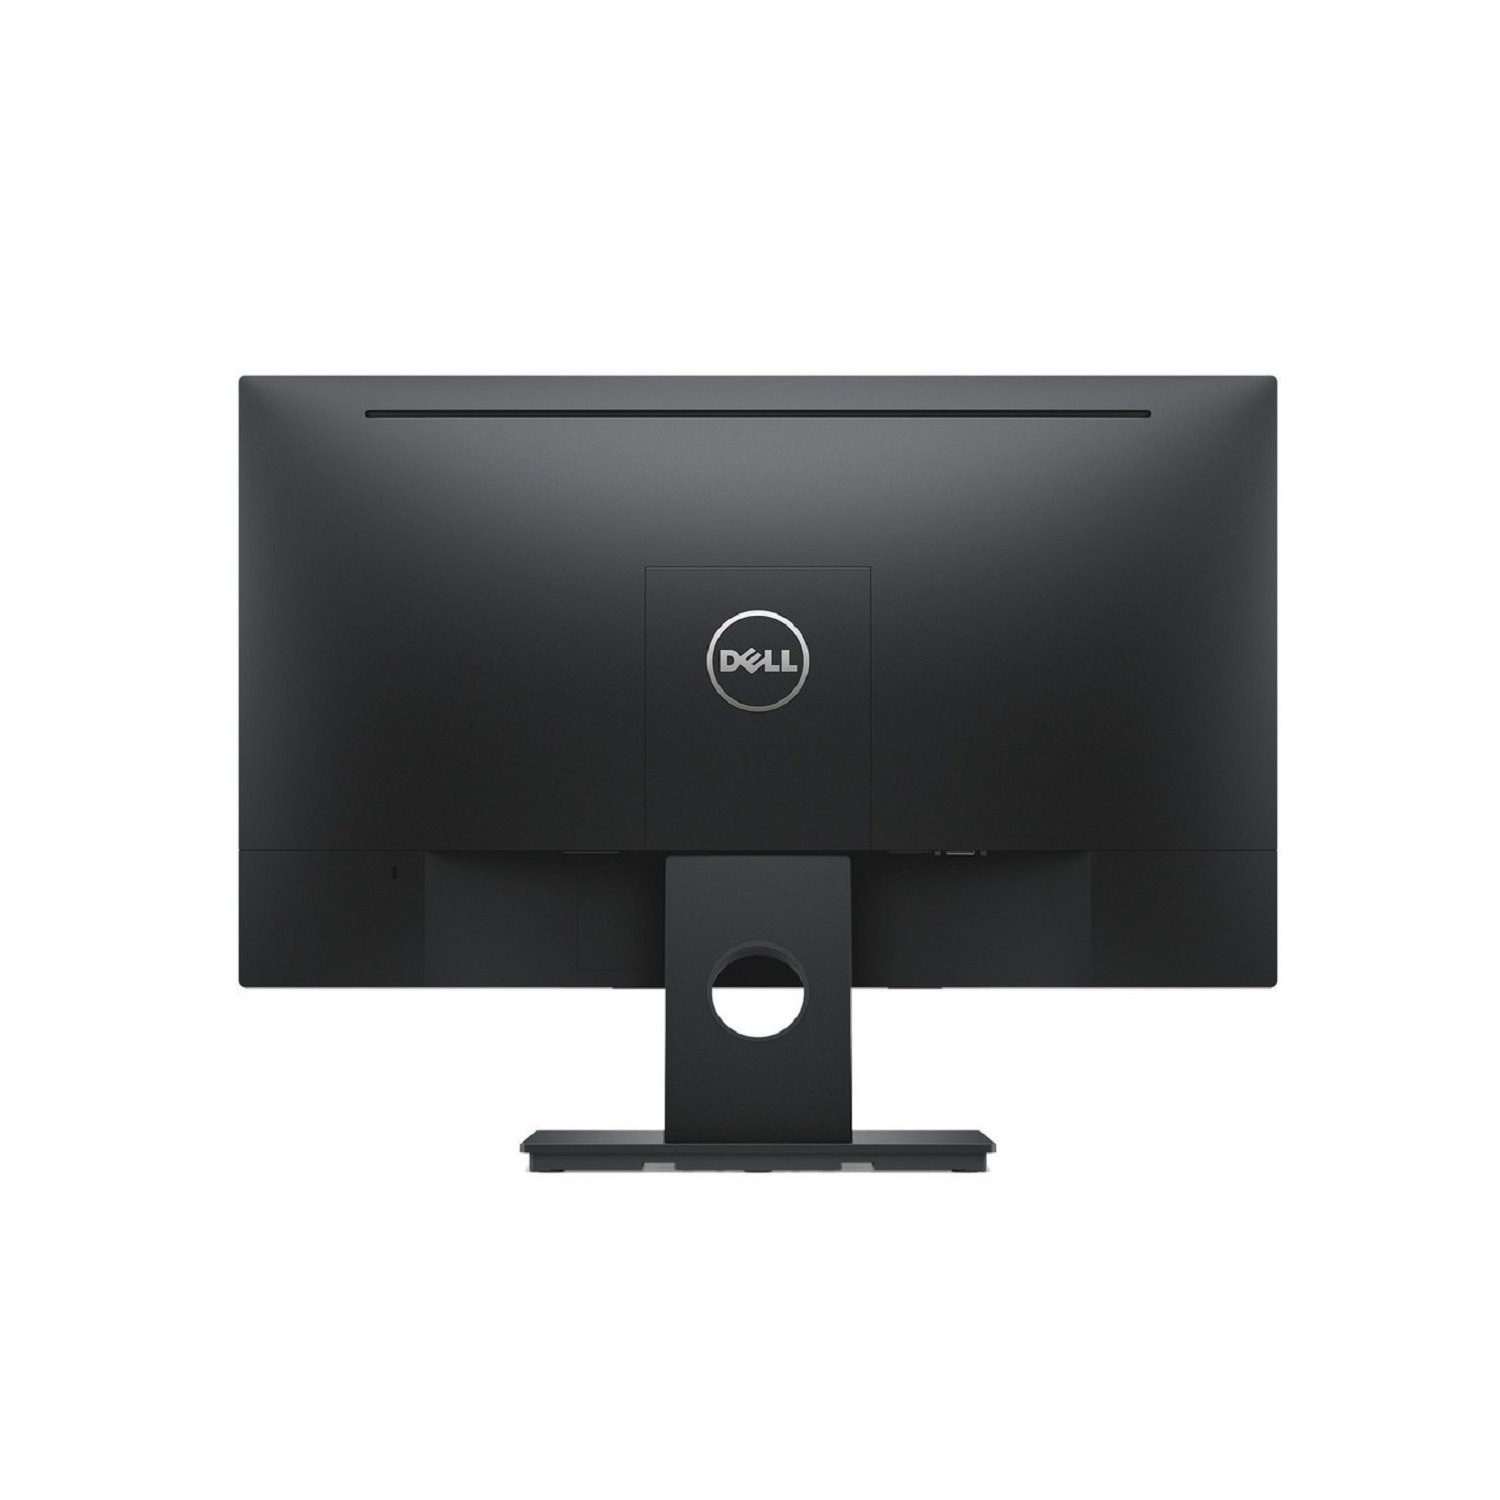 Dell E2418HN 24" Class Full HD LCD Monitor, 16:9, Black - image 4 of 4